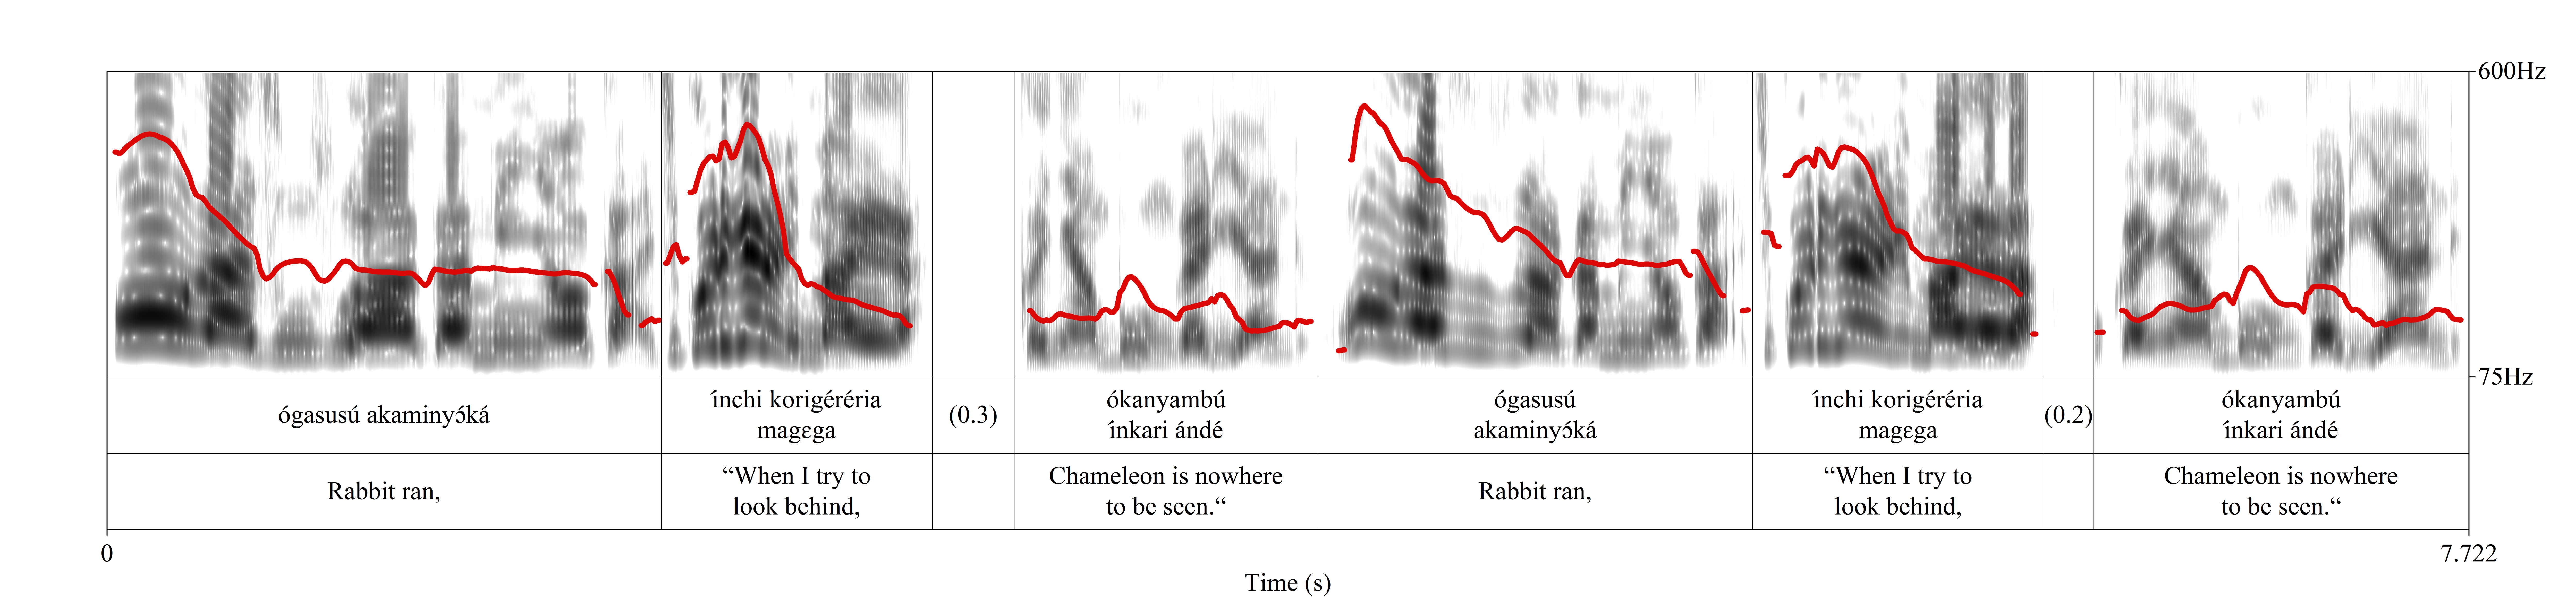 spectrograph illustrating isotony across multiple prosodic phrases